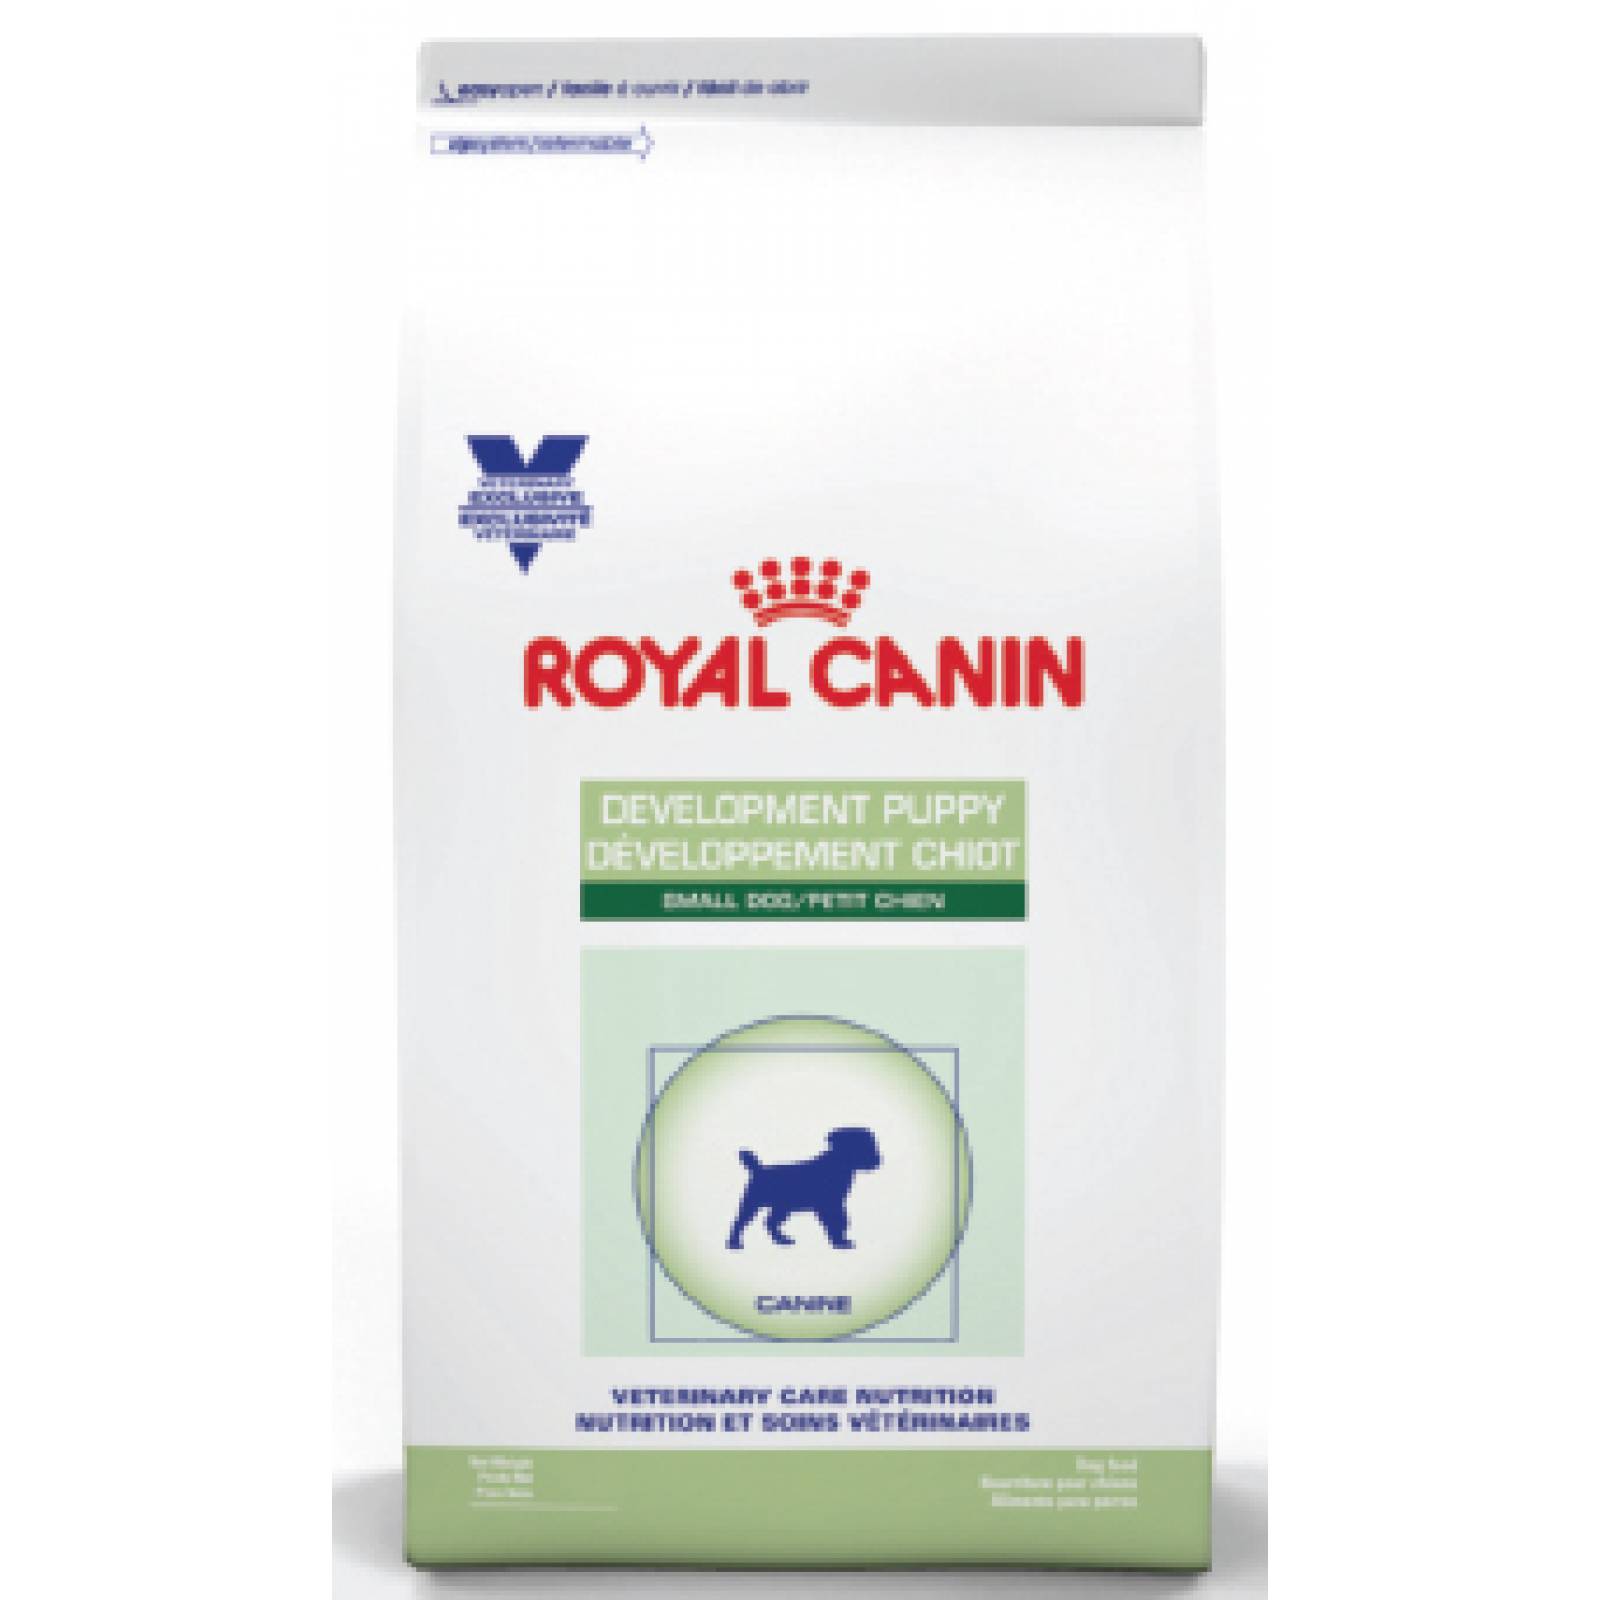 Royal Canin Dieta Veterinaria Alimento para Cachorro Raza pequena en Desarrollo 2 kg